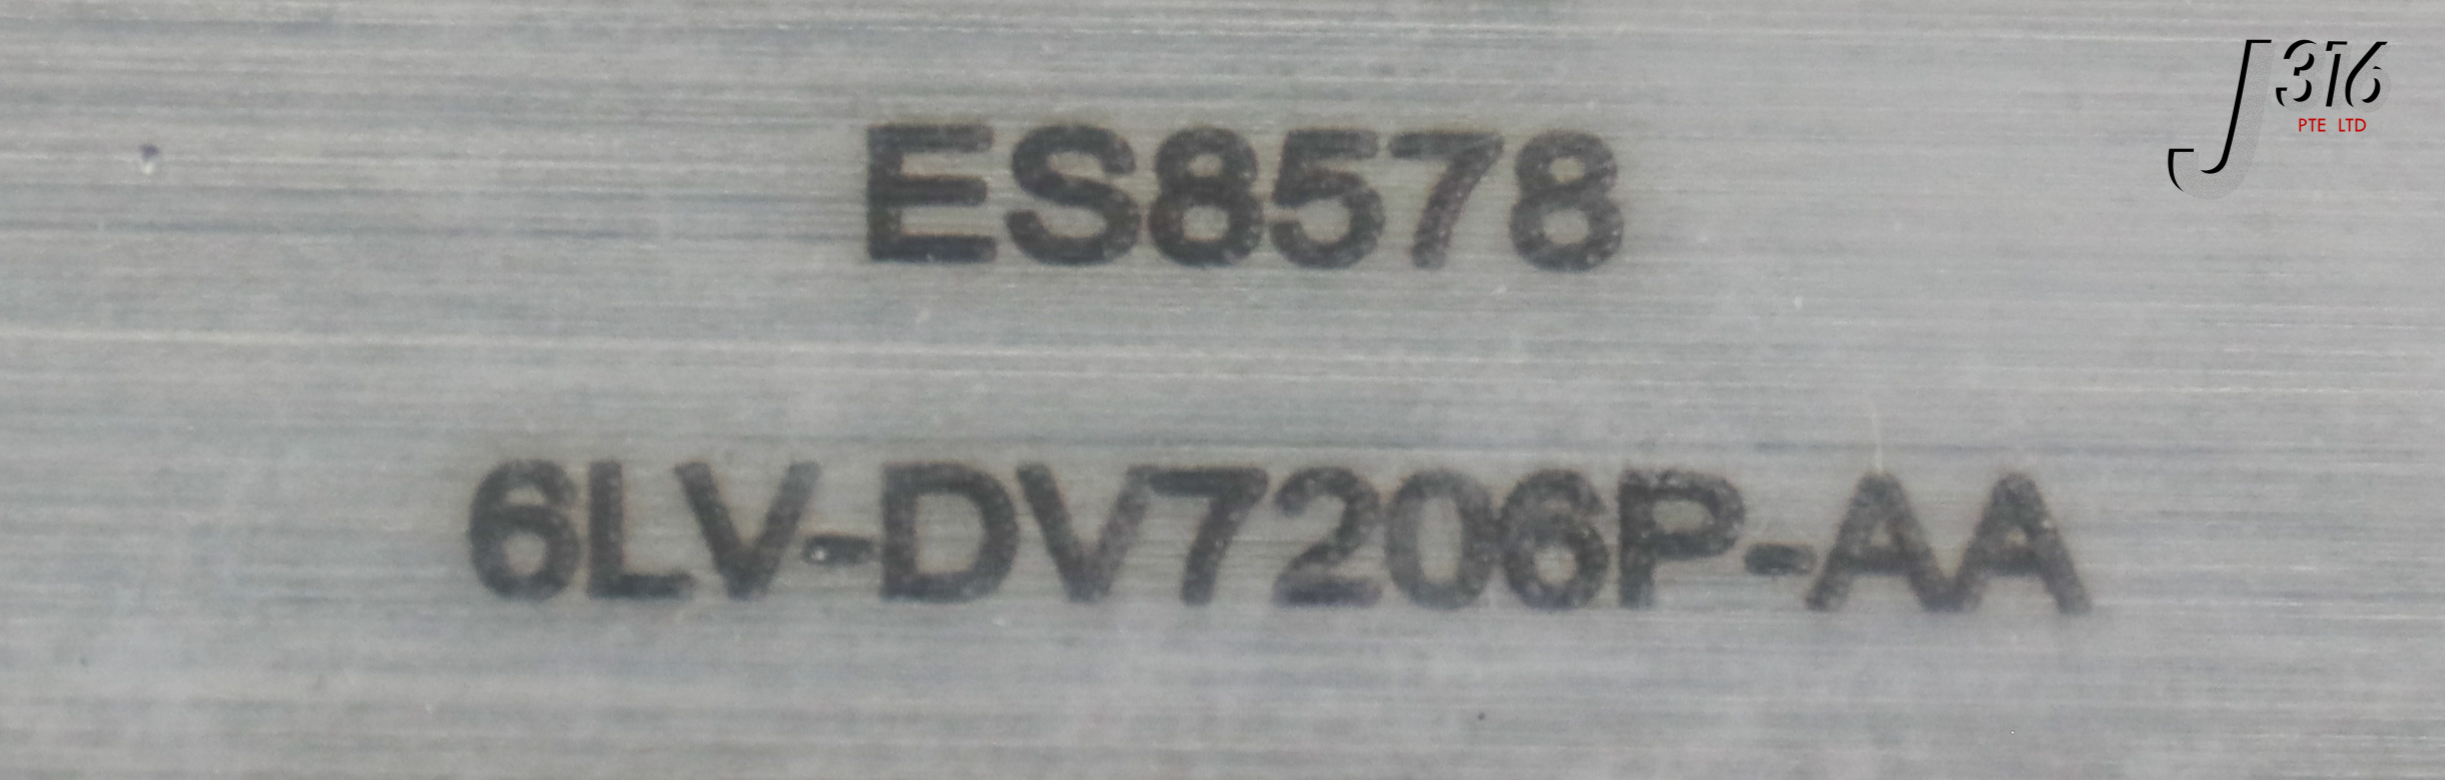 21510 SWAGELOK DUAL BELLOWS FLOW VALVE (NEW) 6LV-DV7206P-AA – J316Gallery